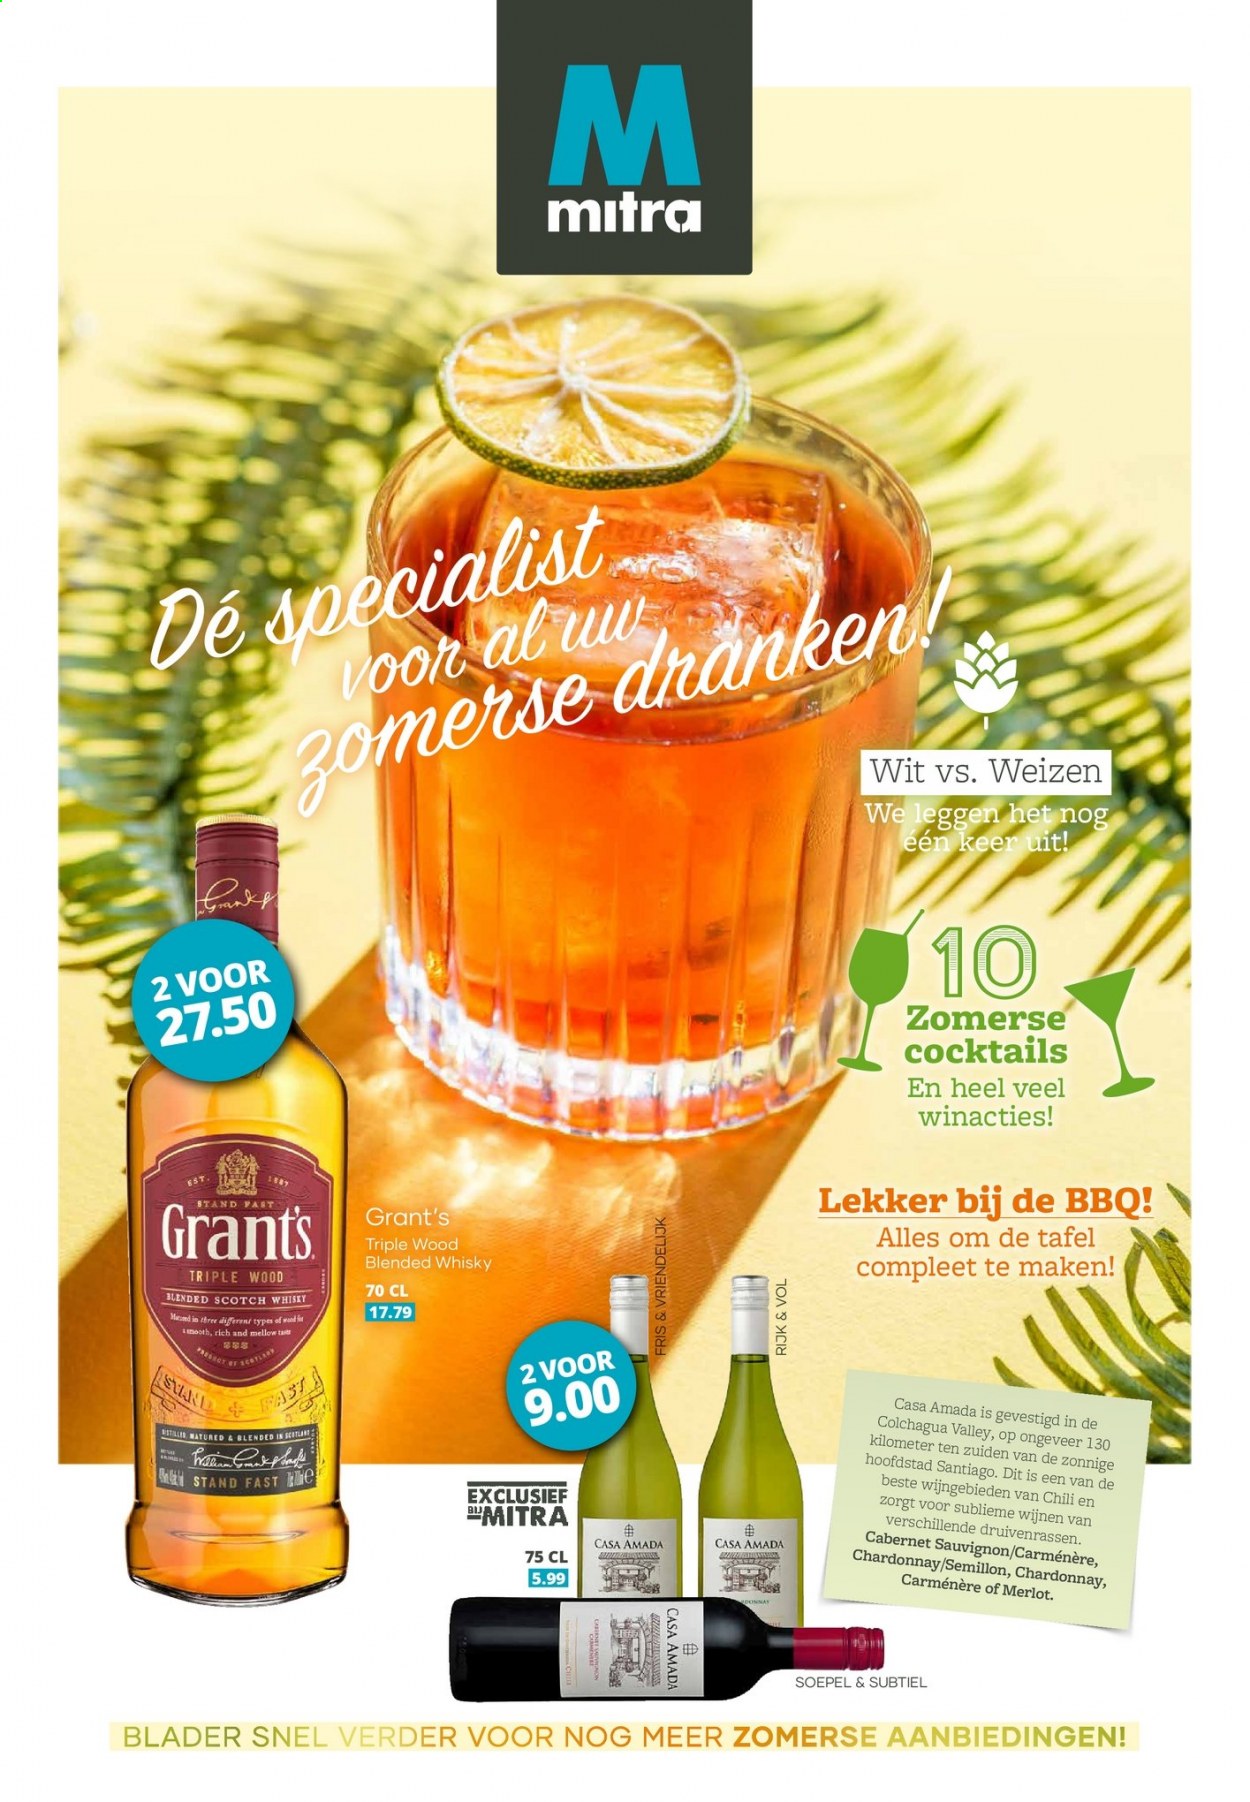 thumbnail - Mitra-aanbieding - 12-7-2021 - 1-8-2021 -  producten in de aanbieding - Cabernet Sauvignon, Carmenère, Chardonnay, Merlot, blended scotch whisky, scotch whisky, Grant‘s. Pagina 1.